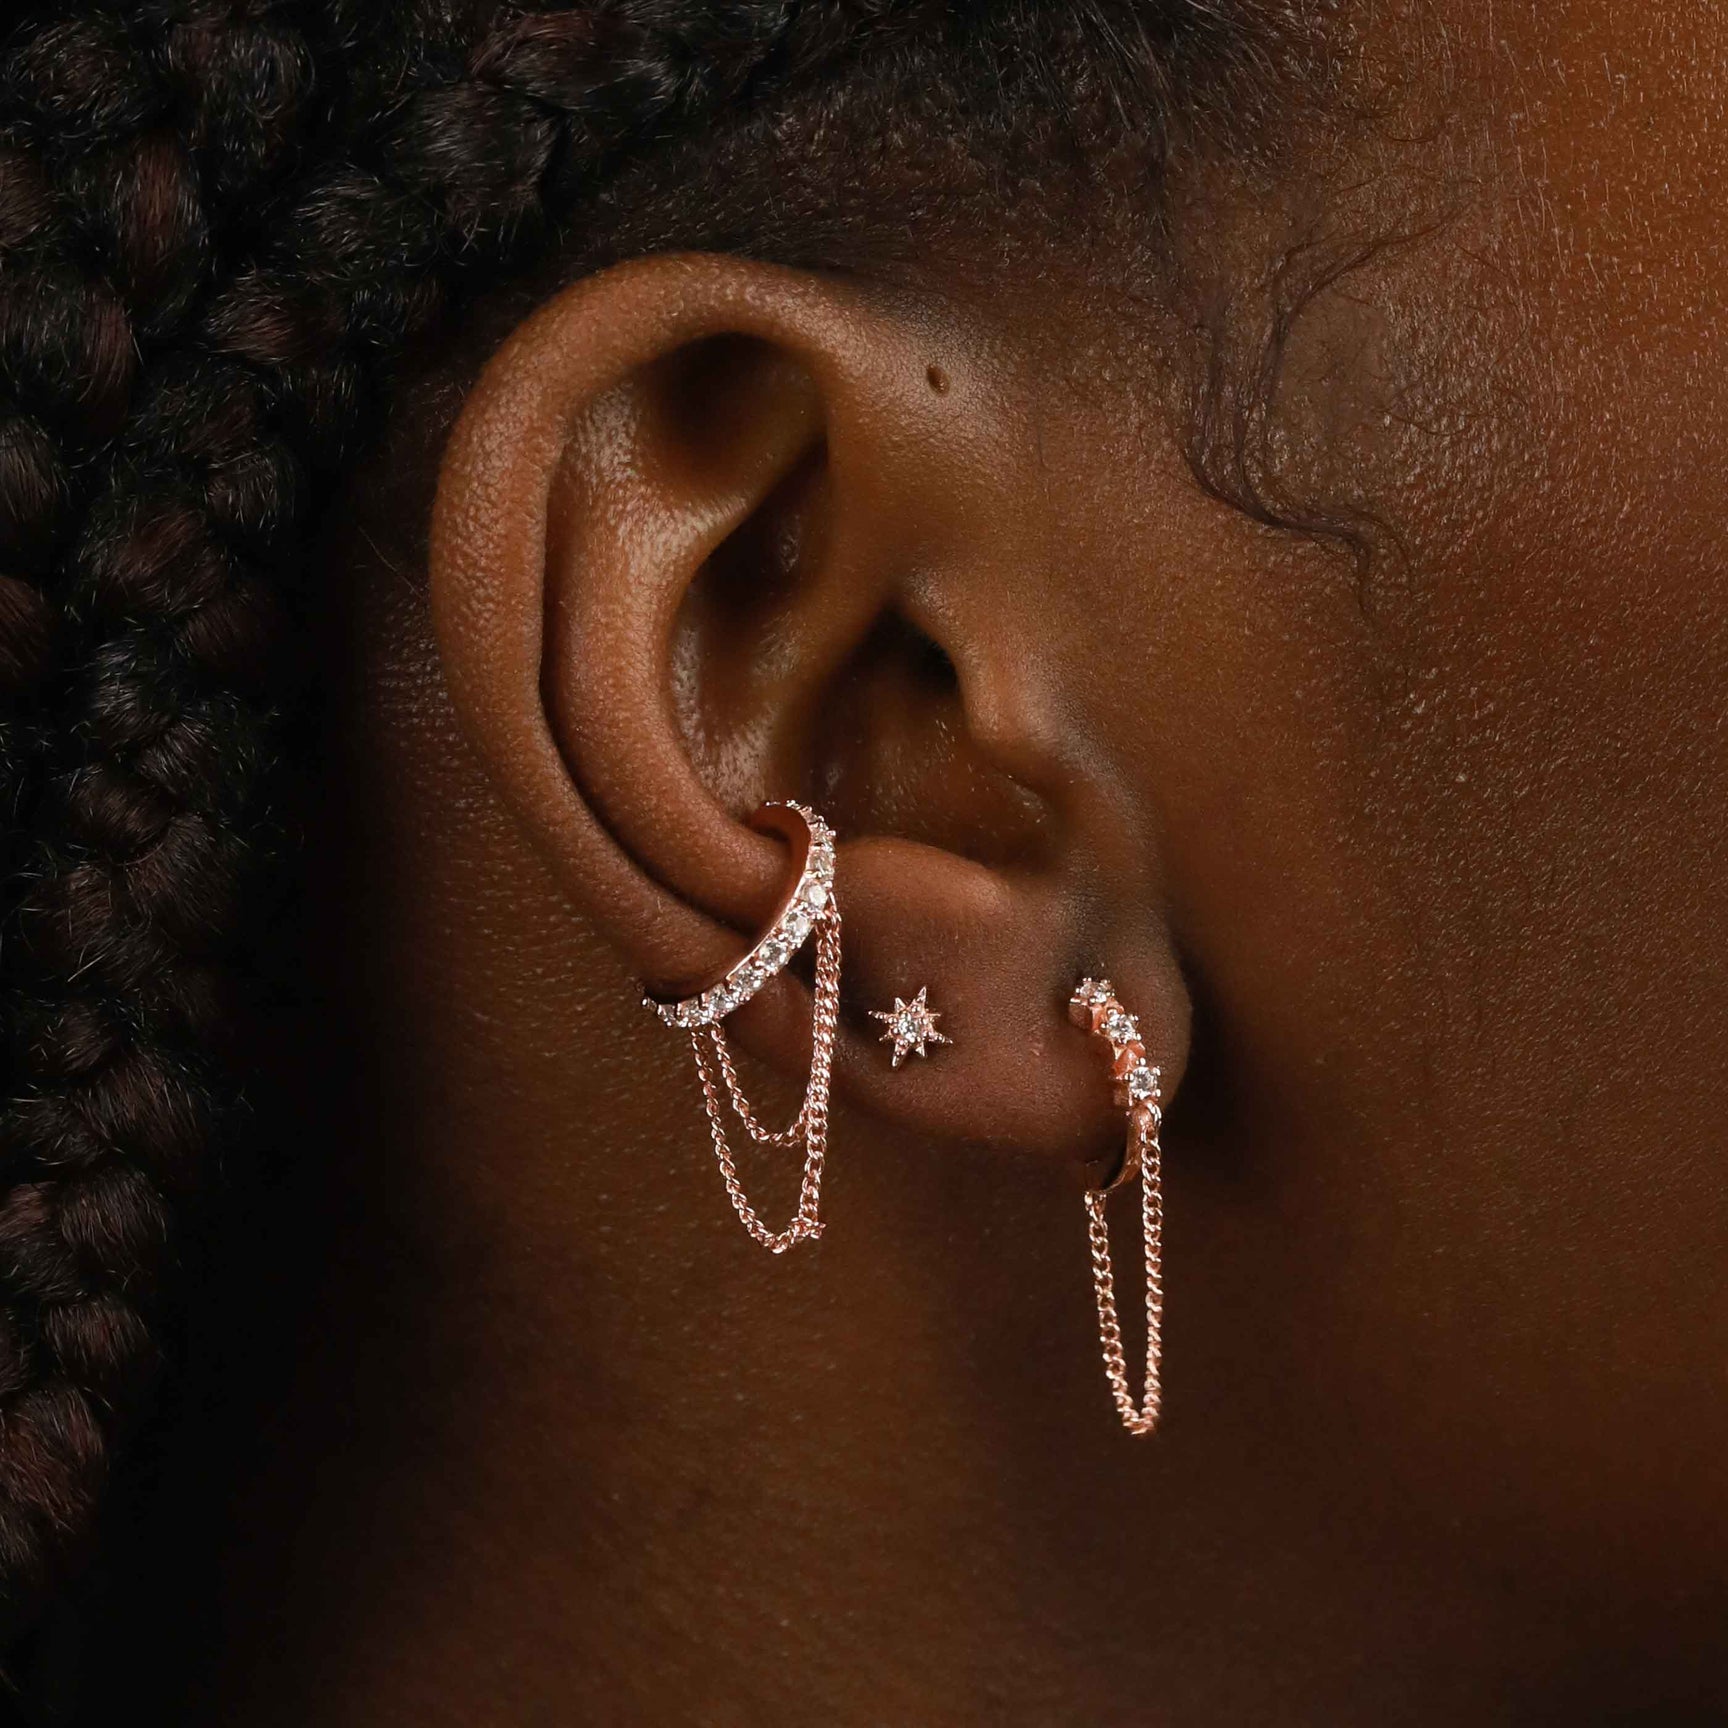 Twilight Star Stud Earrings in Rose Gold